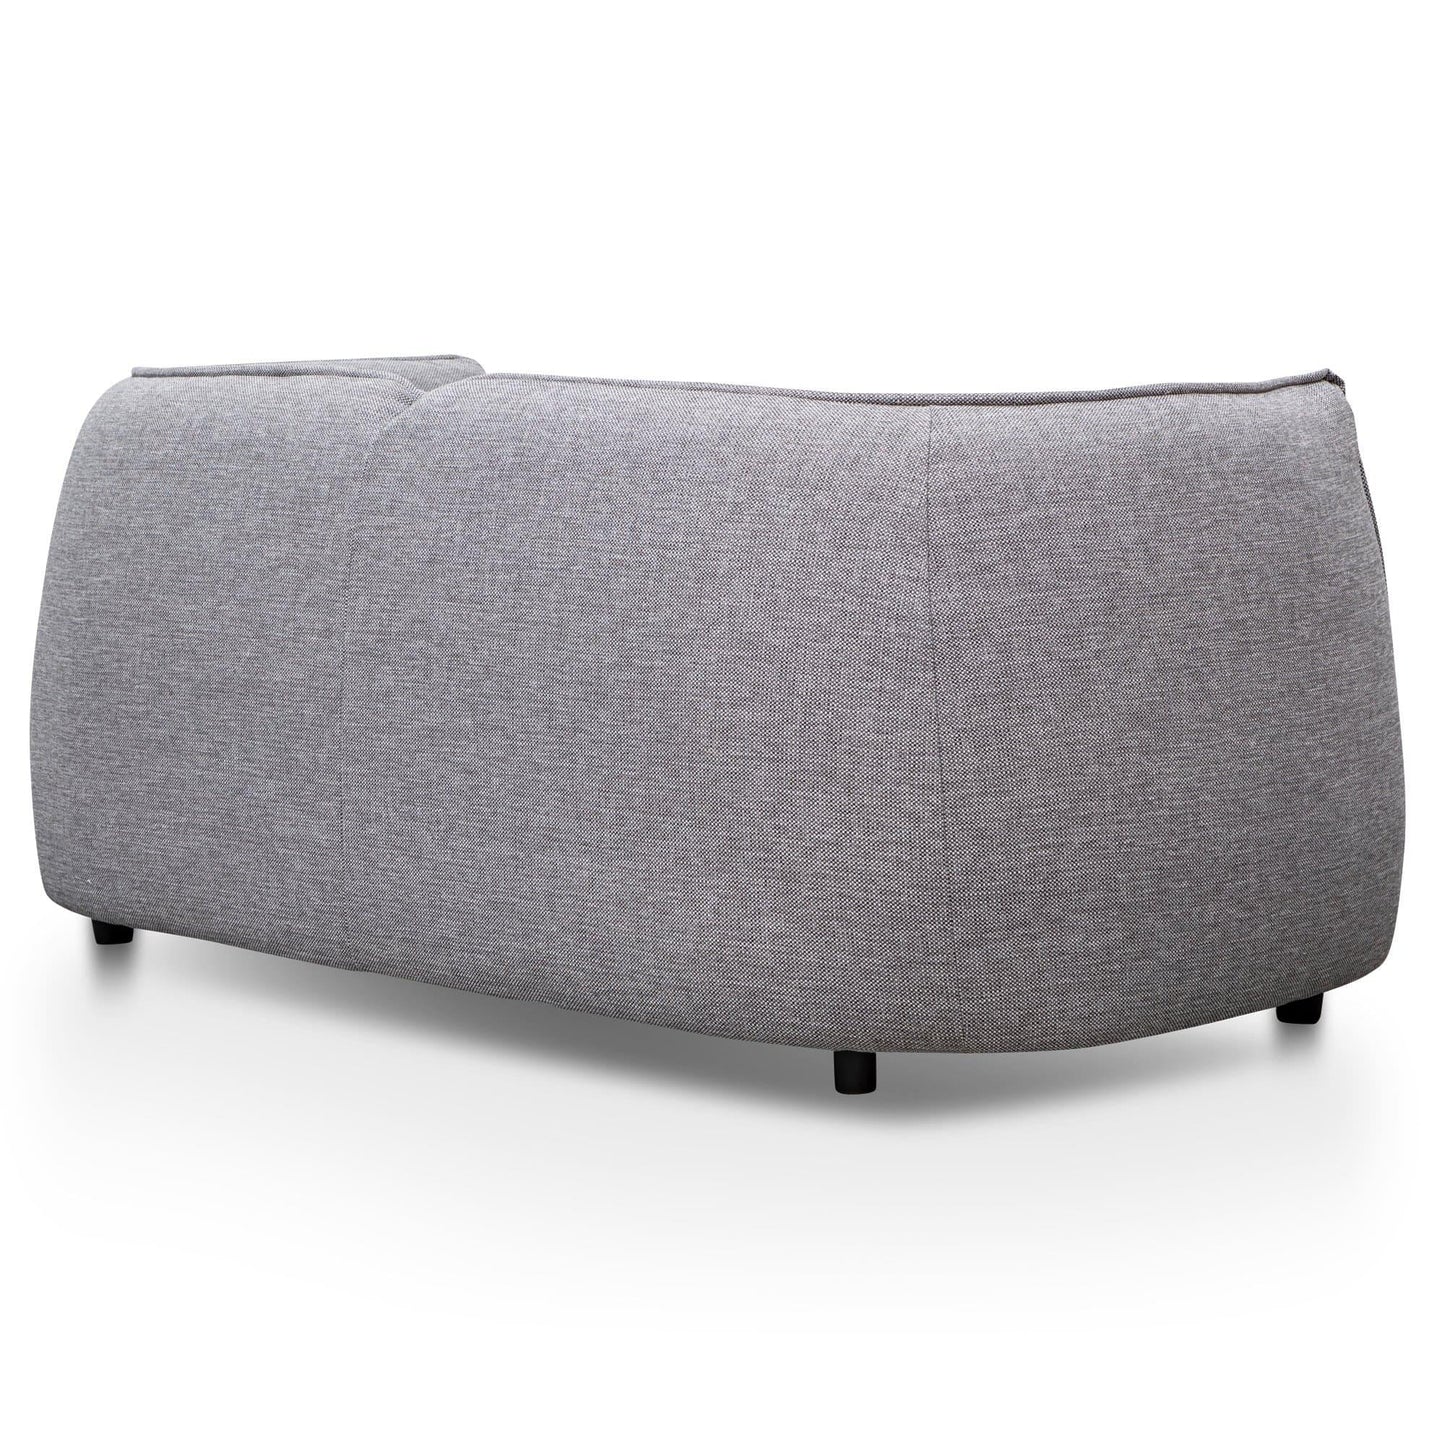 Calibre 2 Seater Fabric Sofa- Graphite Grey LC2874-KSO-Sofas-Calibre-Prime Furniture